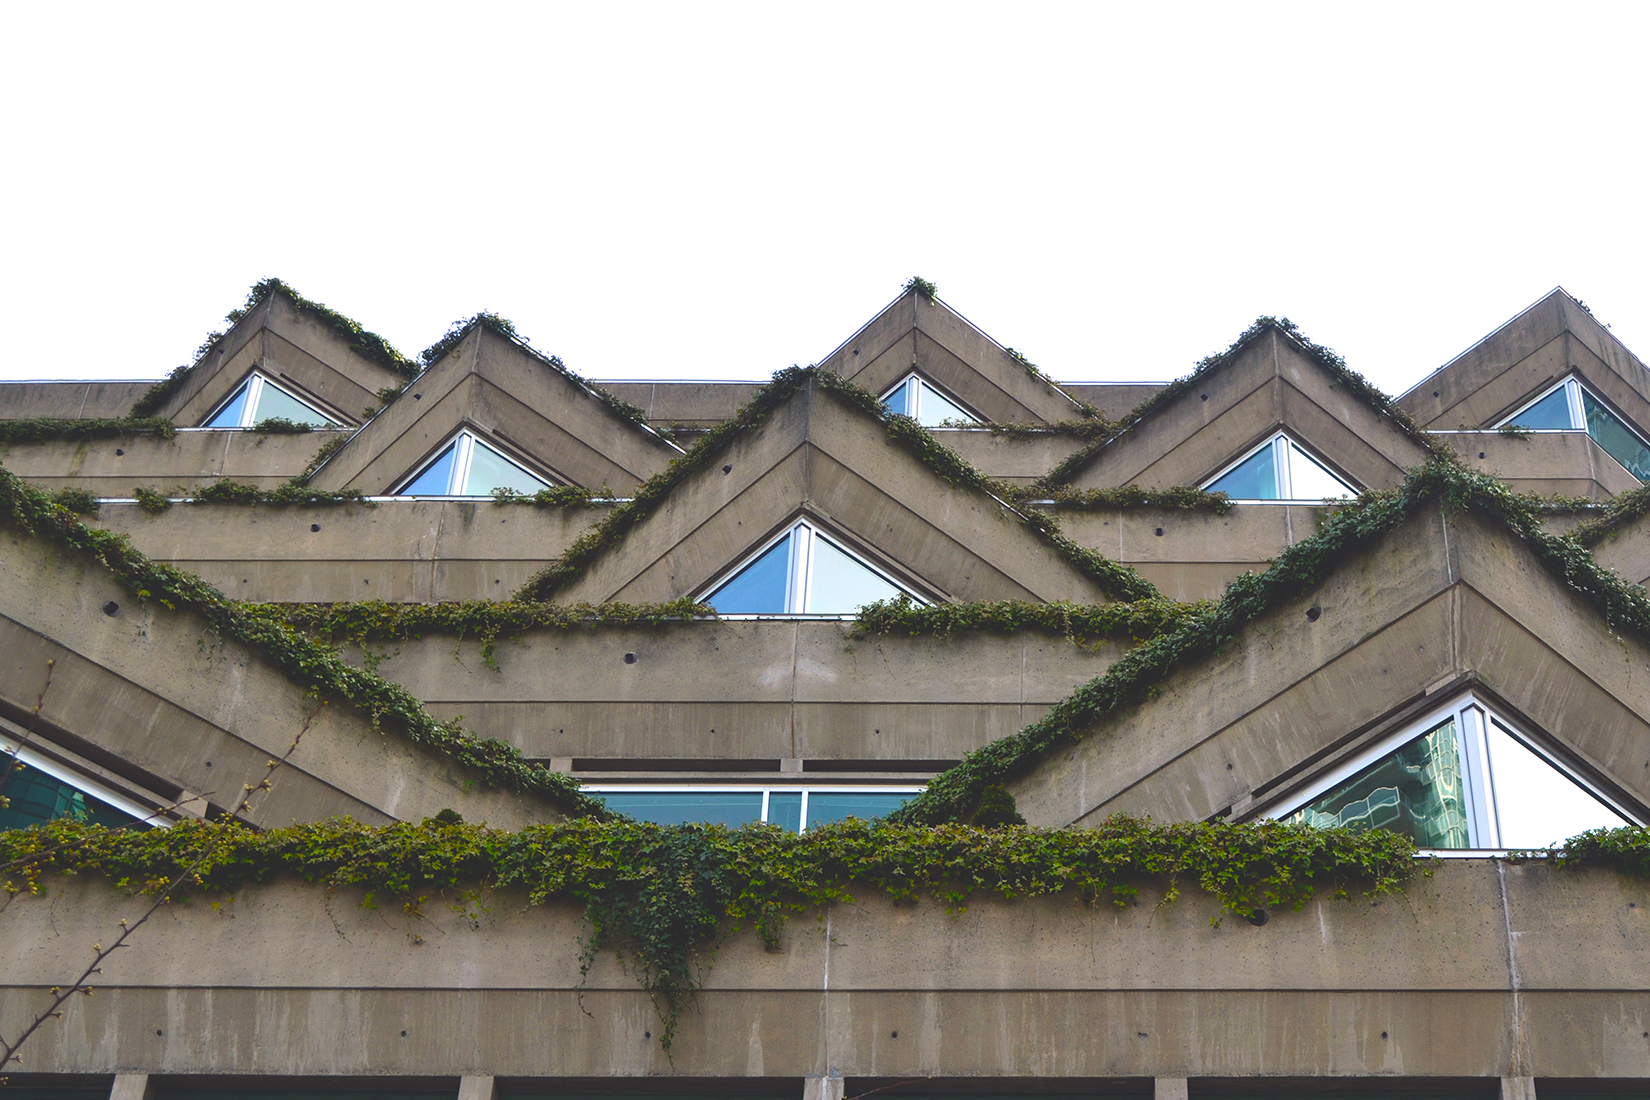 Evergreen Building, 1980